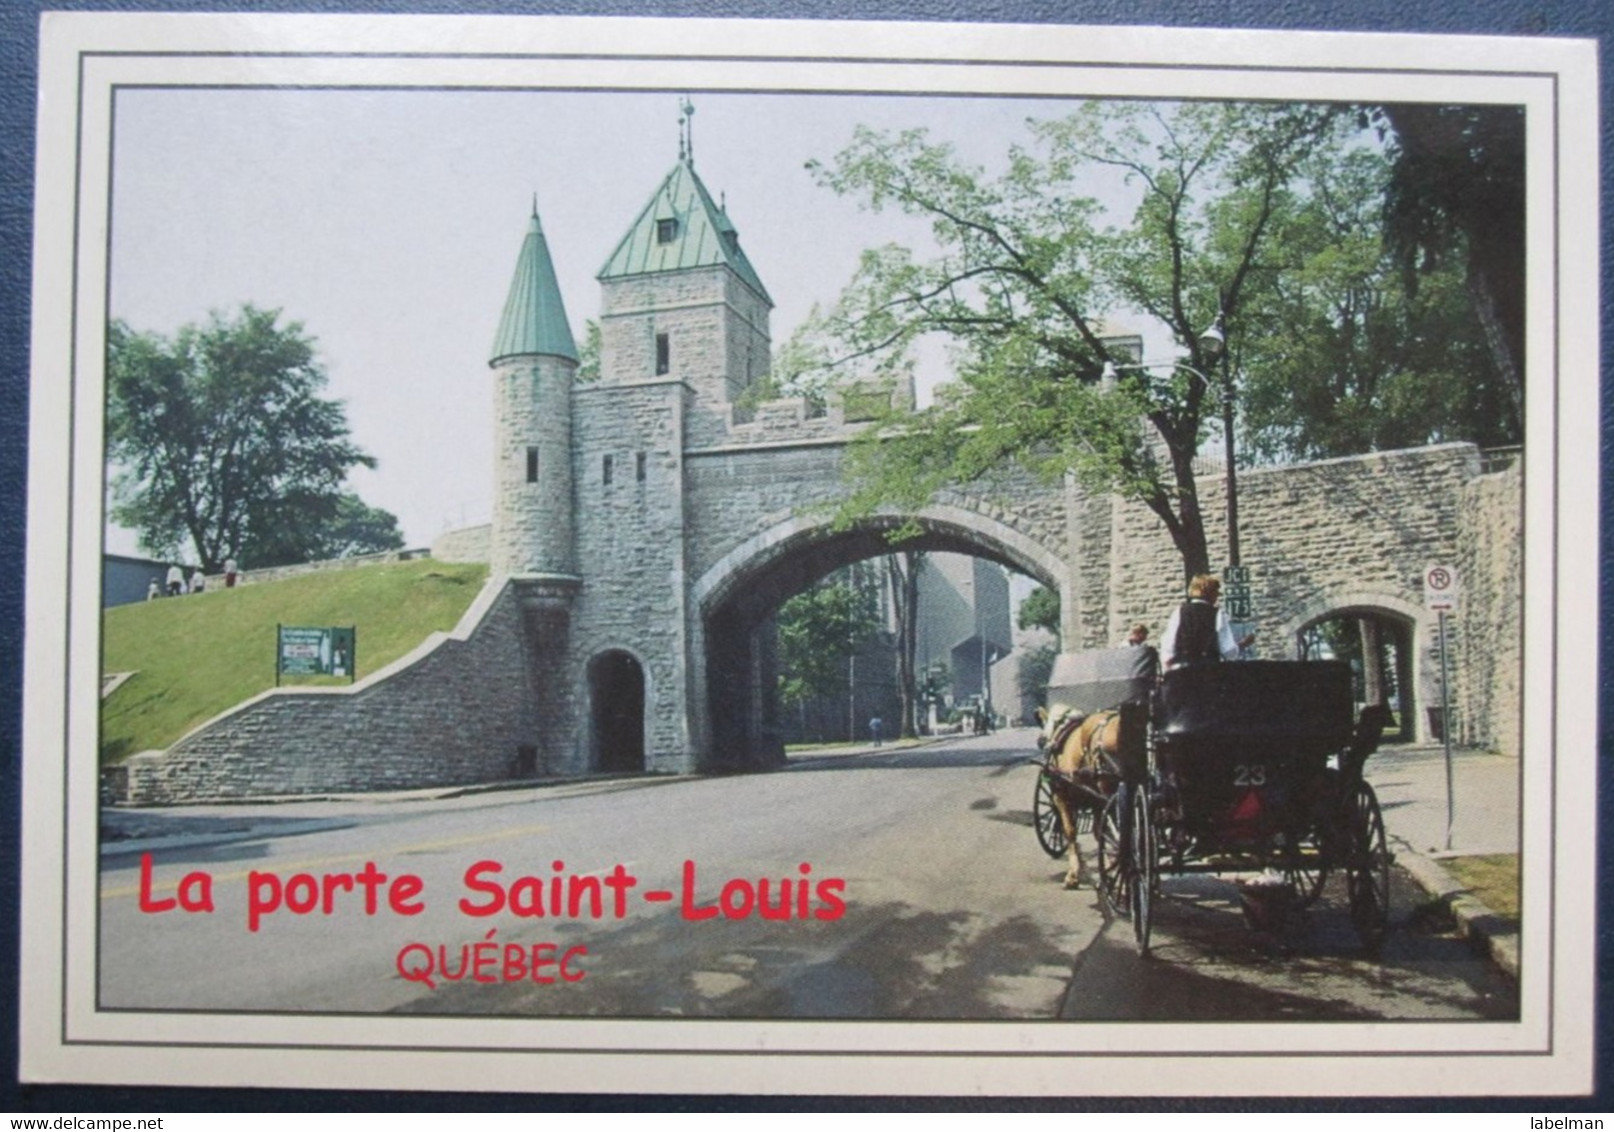 PORTE SAINT LOUIS QUEBEC CANADA CARD POSTCARD ANSICHTSKARTE CARTOLINA CARTE POSTALE PHOTO PICTURE - Dauphin